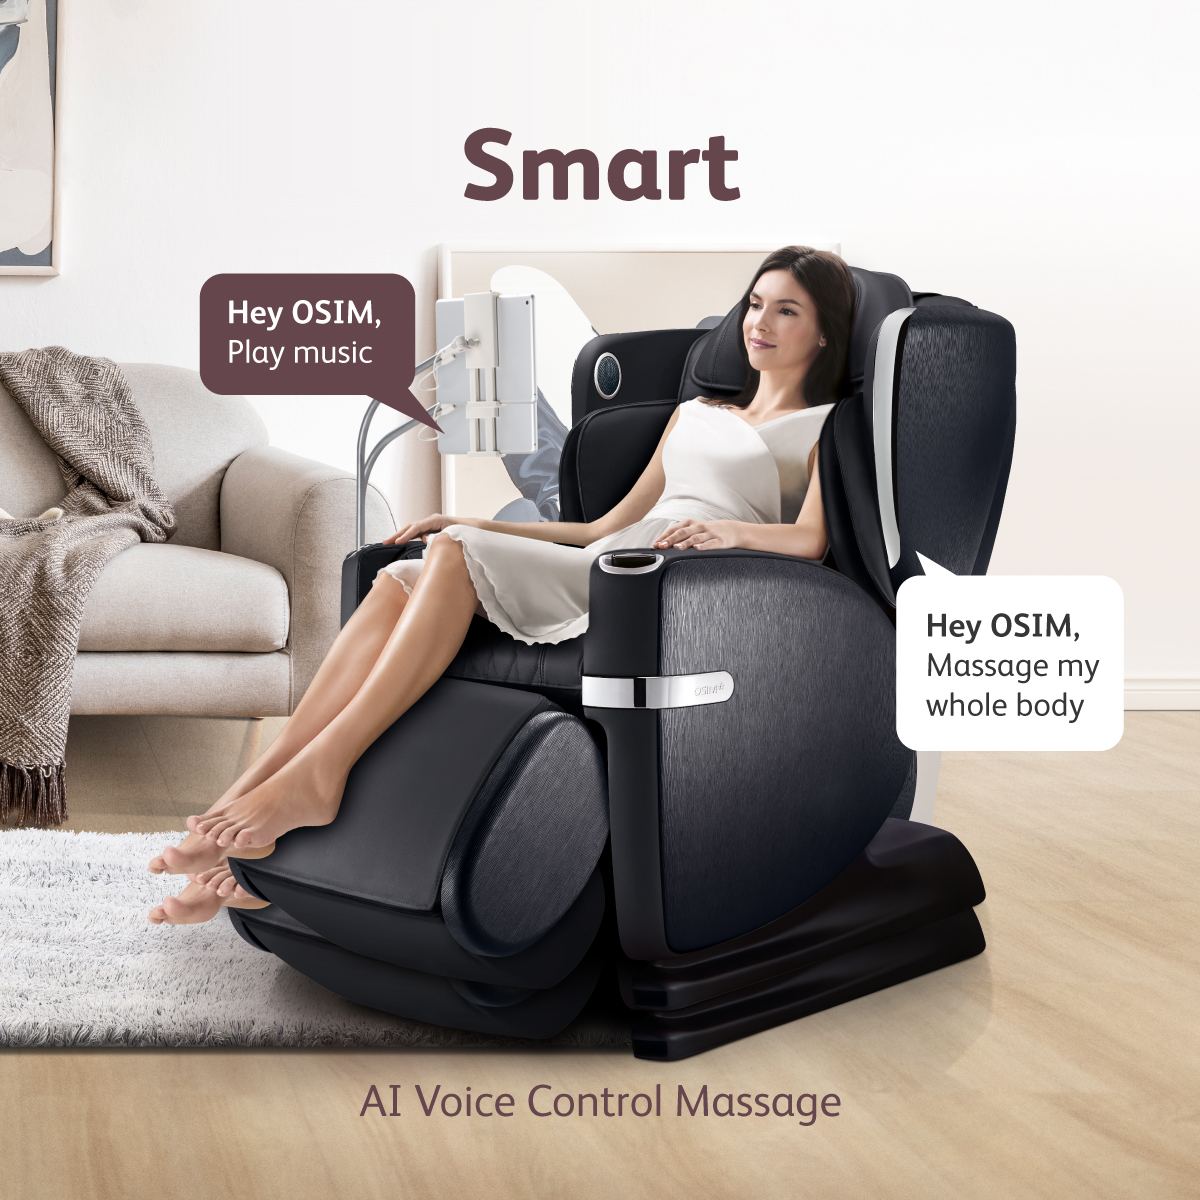 OSIM uLove 2 (Black) Massage Chair